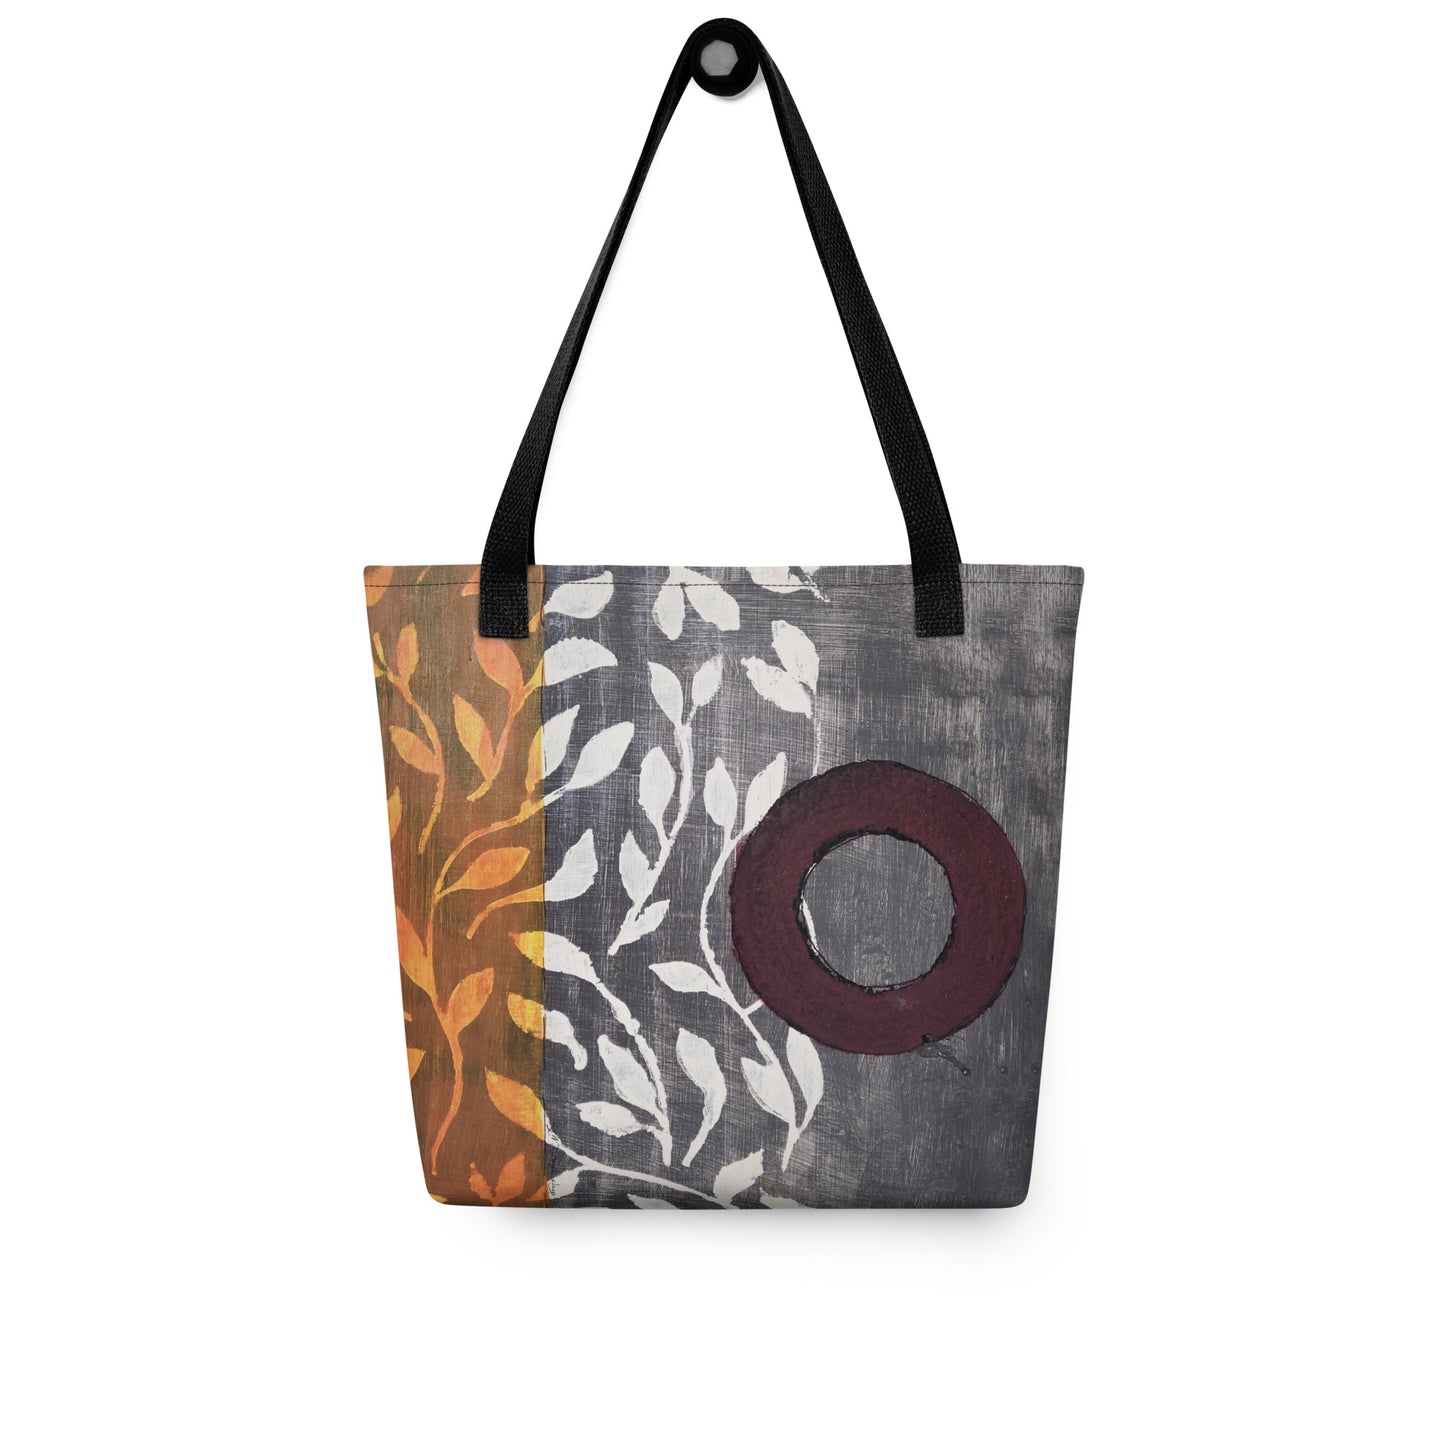 Tote bag of original art. Plum circle on gray and light burnt orange background with off-white leaf design.